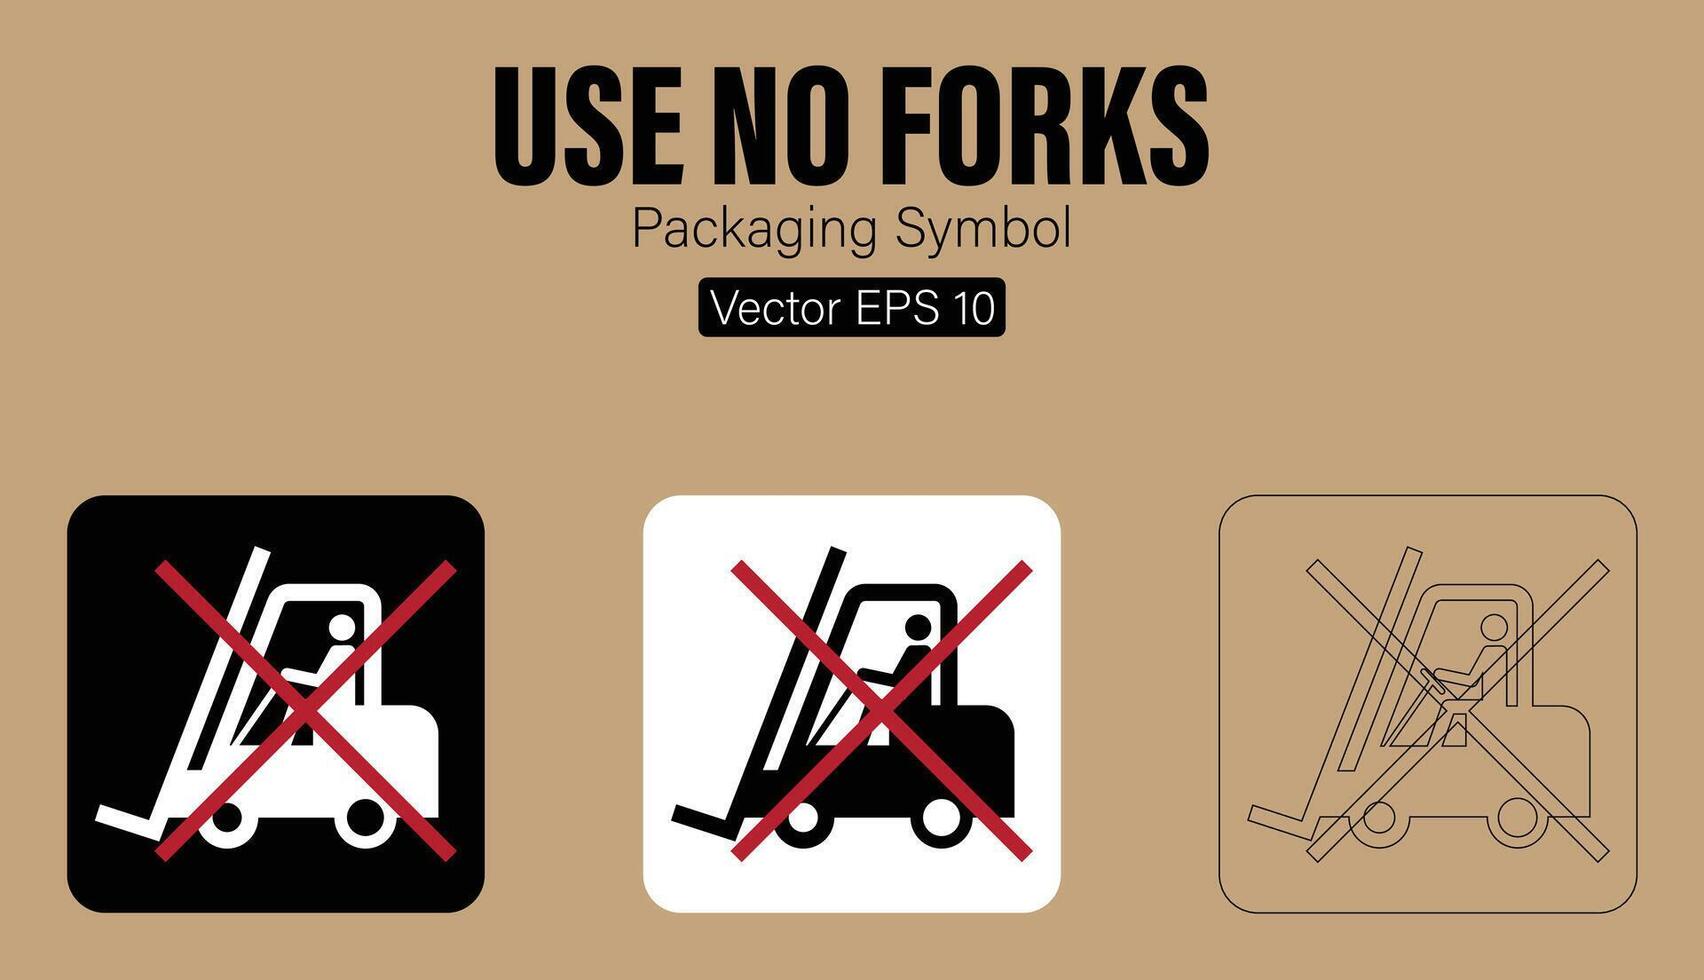 Do Not Use Forklift Packaging Symbol vector